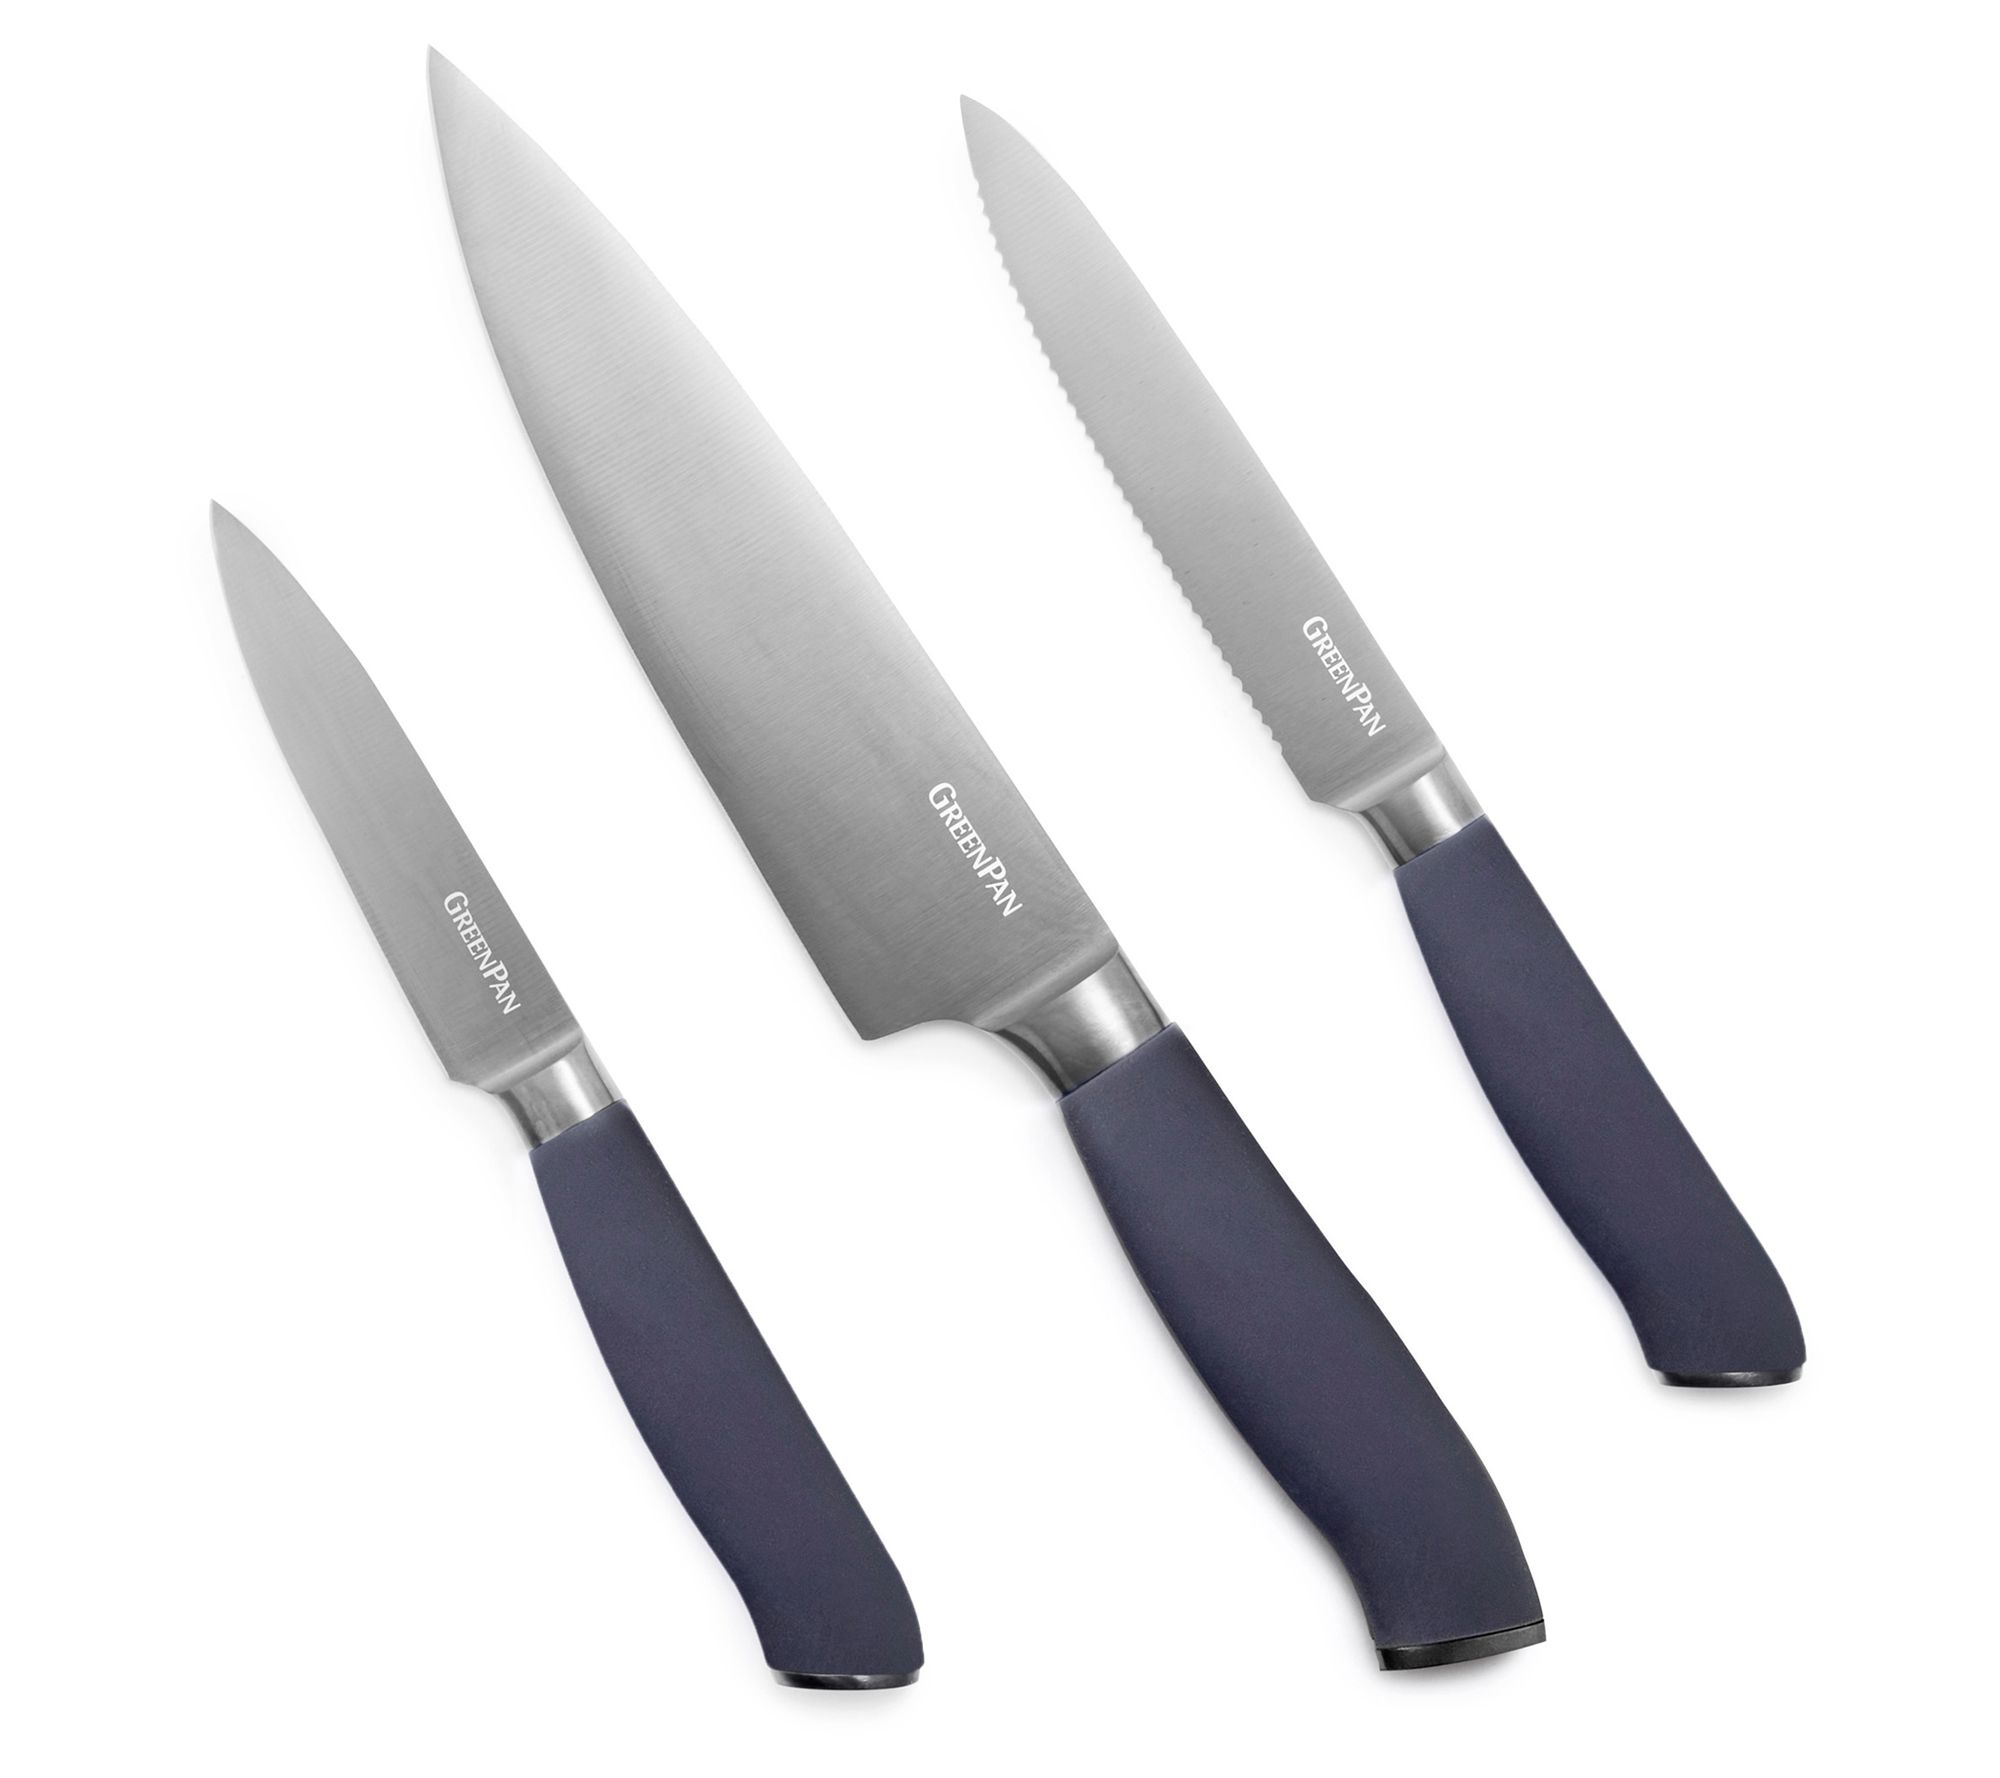 KYOCERA > The ultimate ultra-sharp, lightweight, ergonomic 3 piece knife set